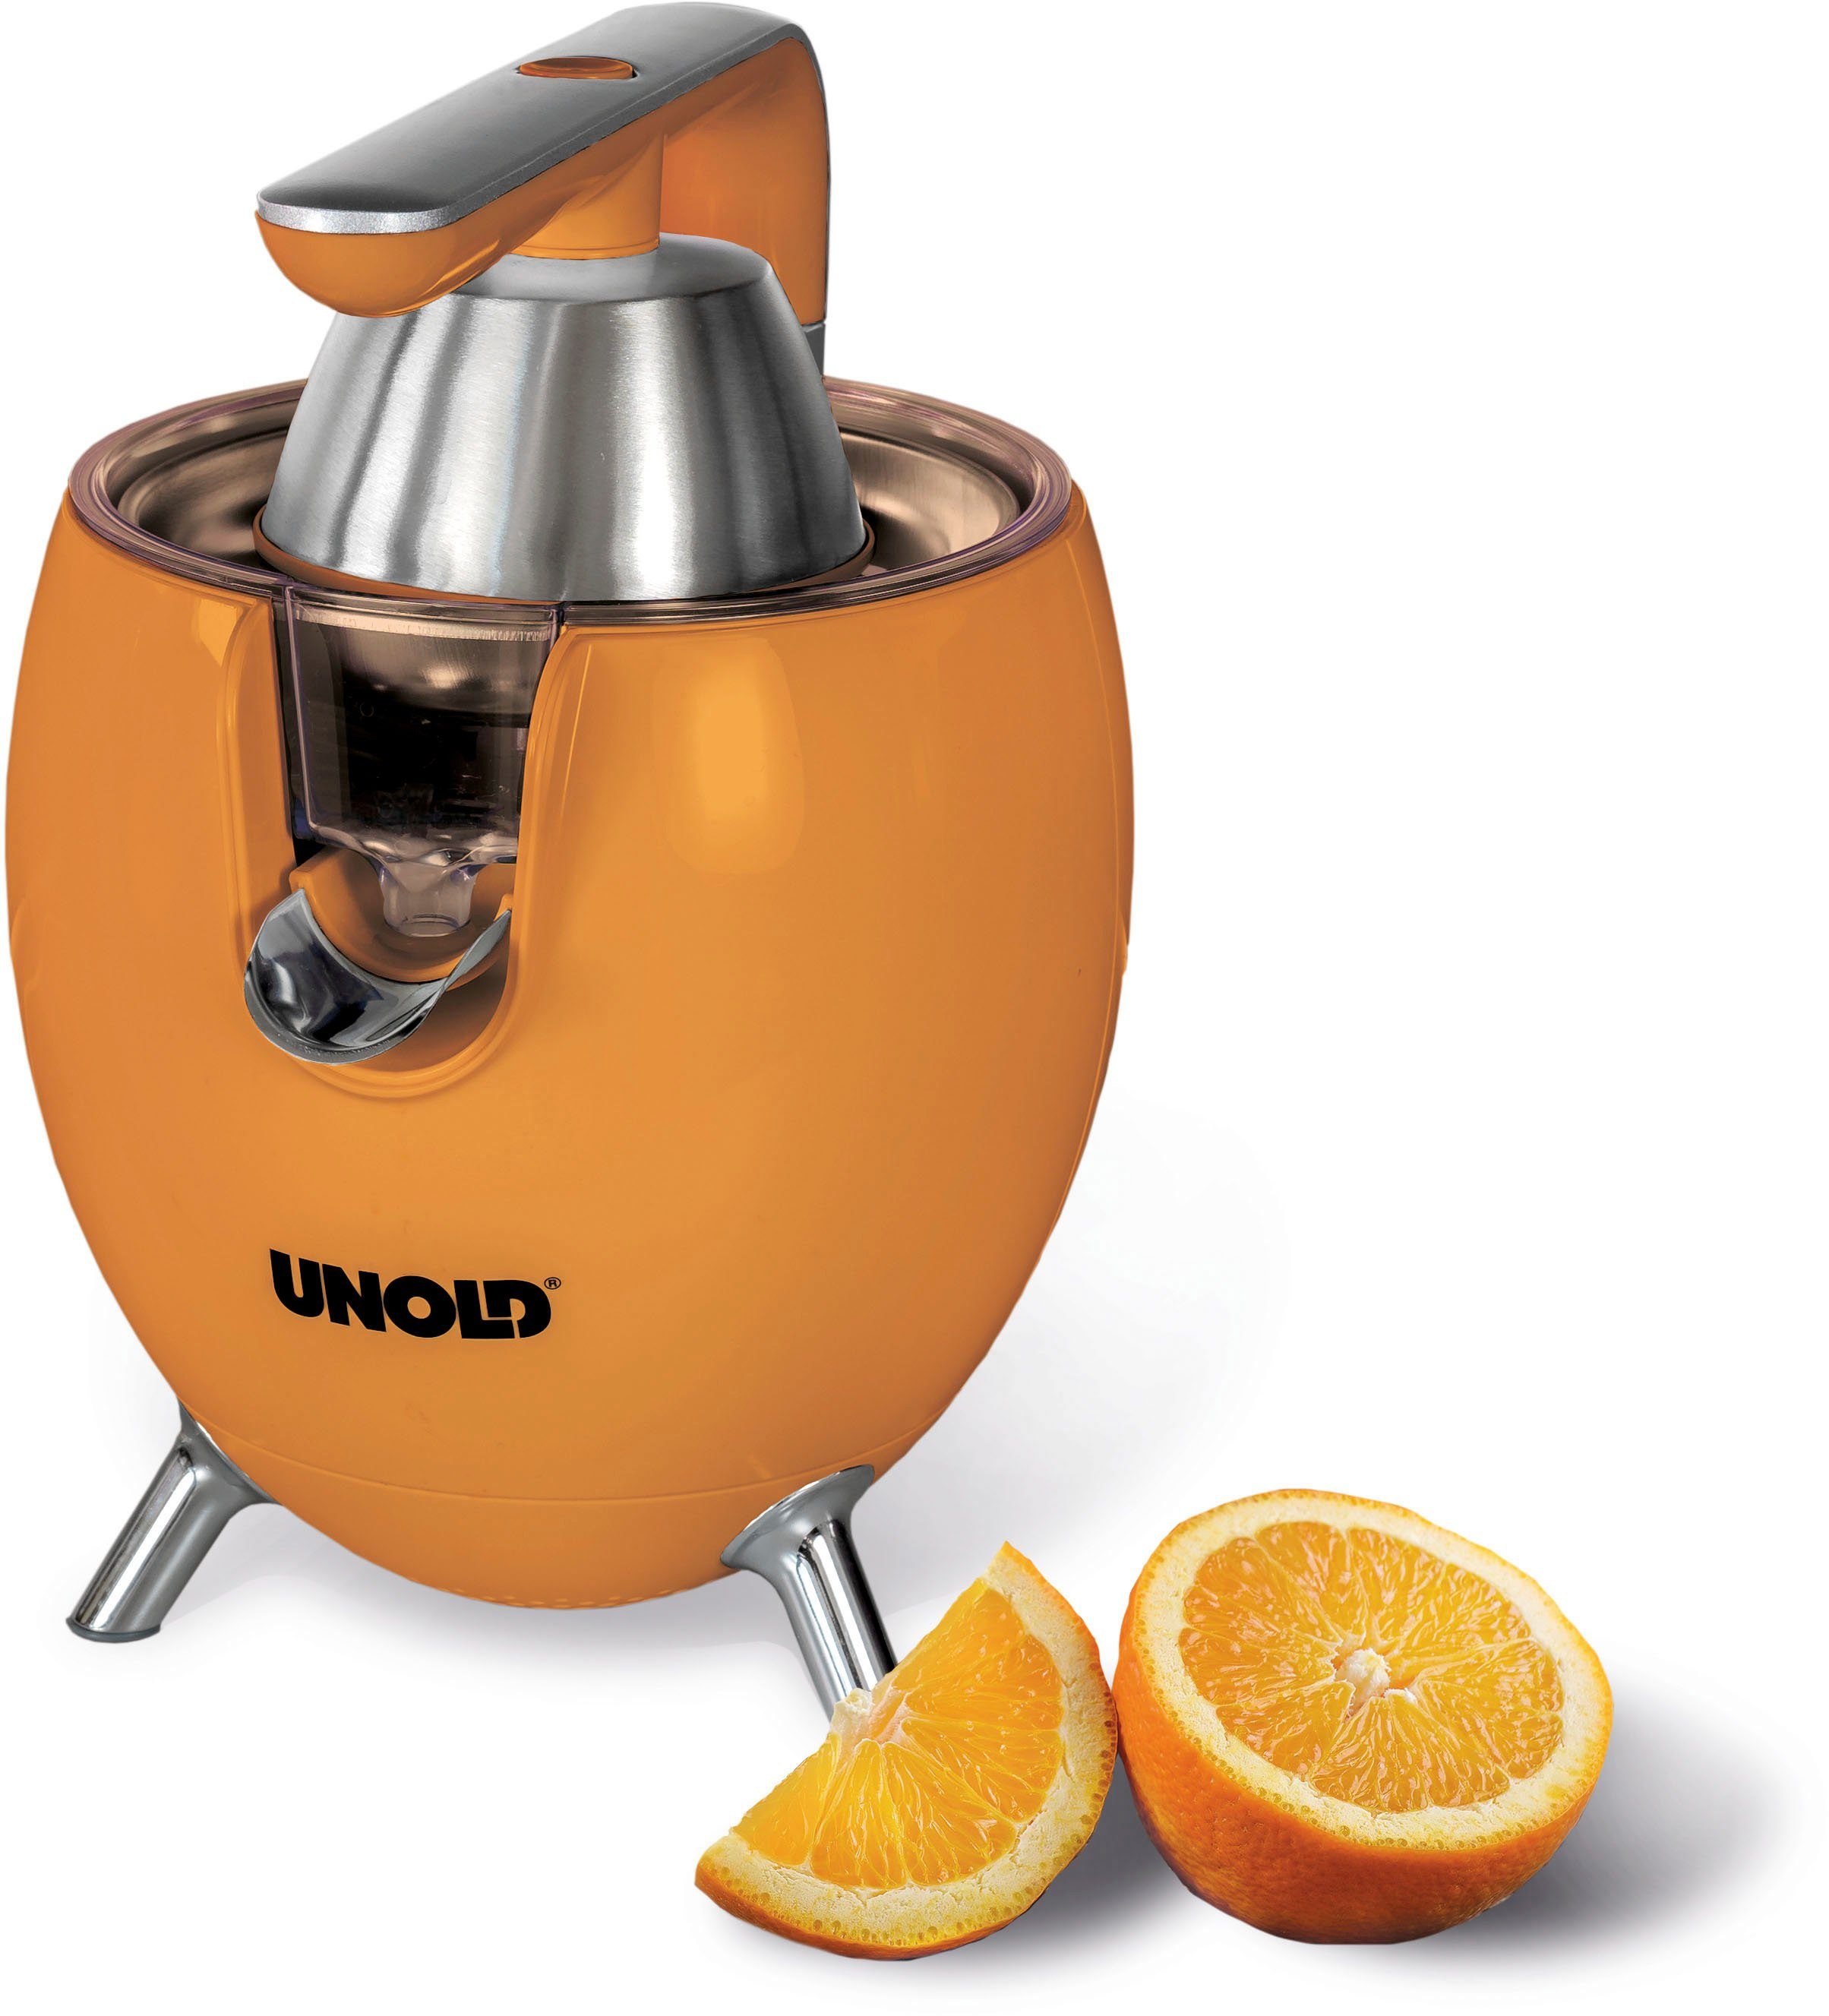 W Juicy 300 78133 Zitruspresse Unold Power Orange,